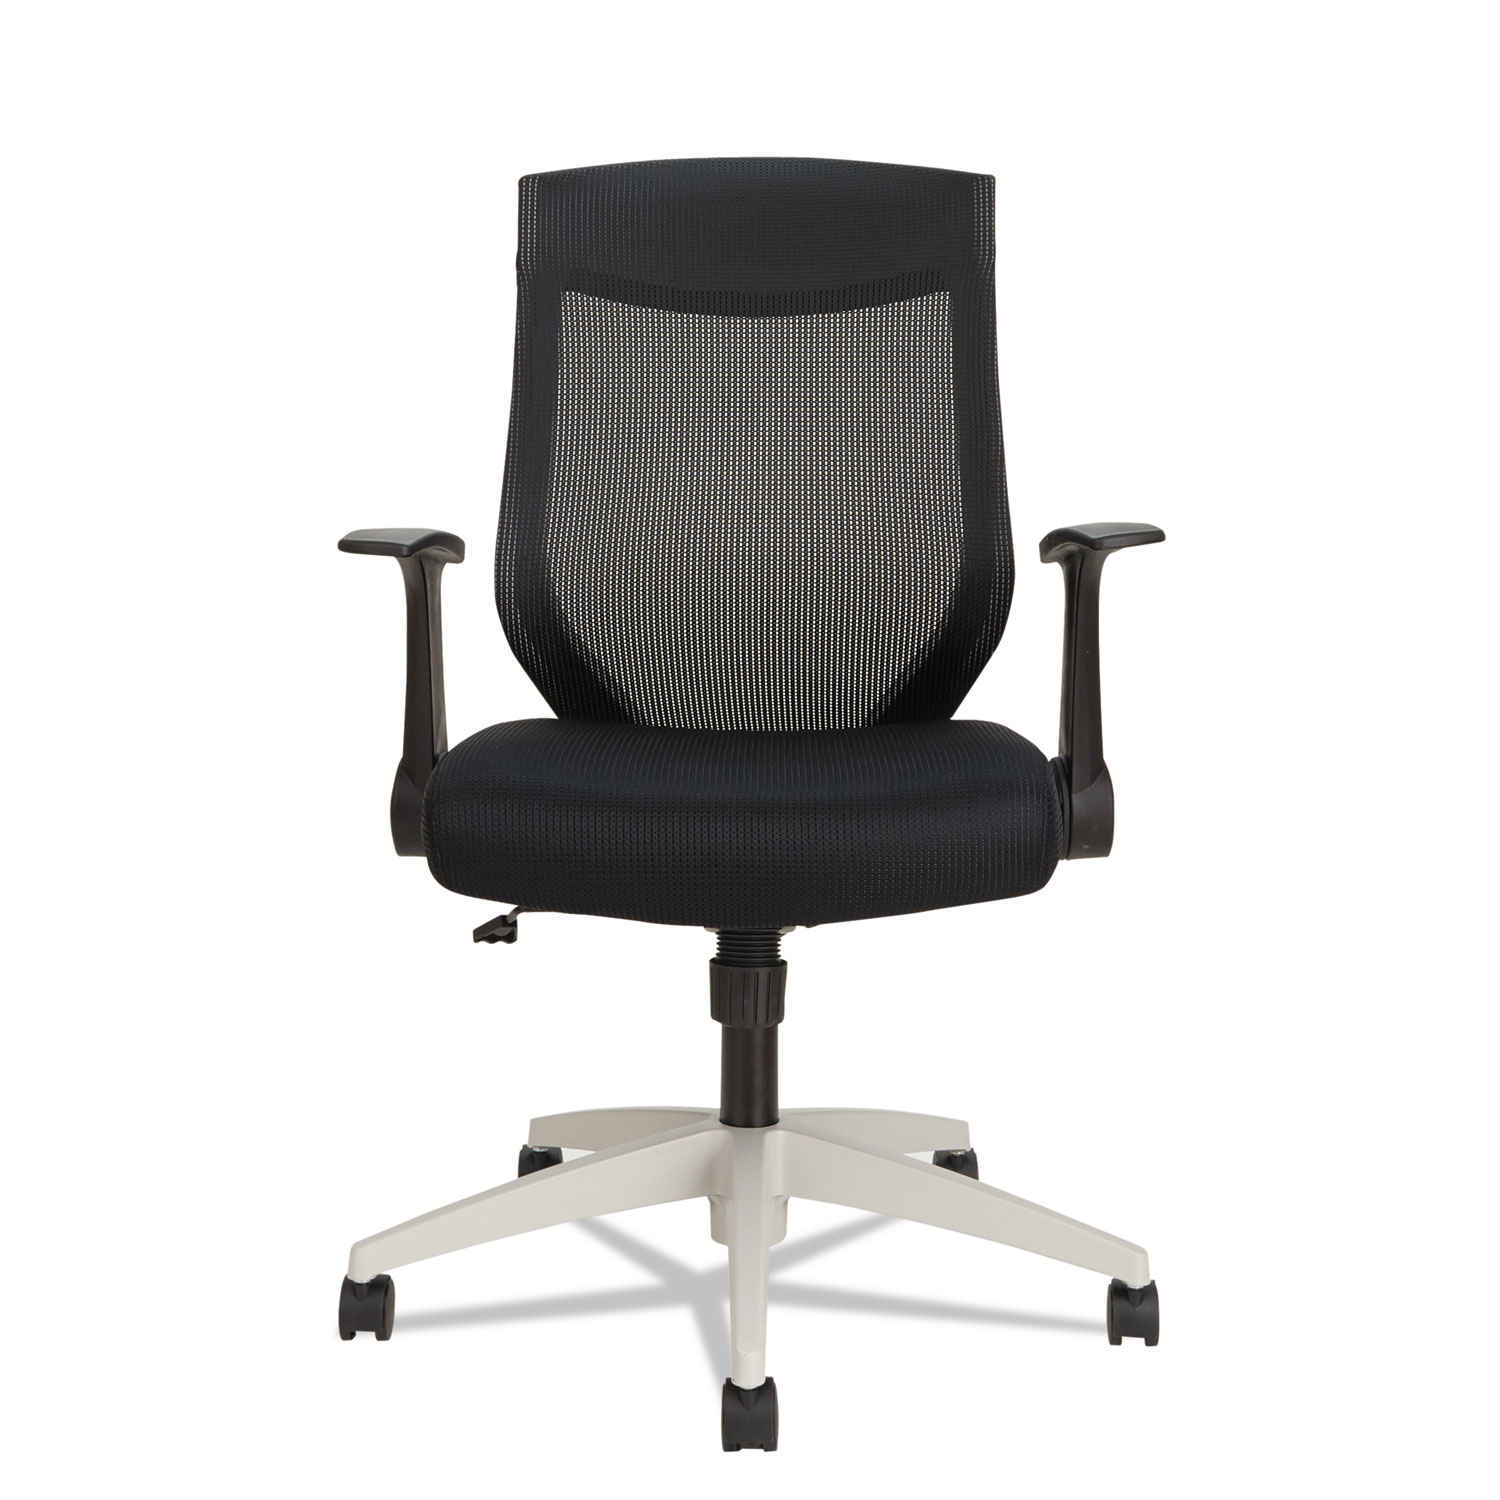  Alera ALEEBK4207 Alera EB-K Series Synchro Mid-Back Flip Arm Mesh-Chair, Supports up to 275 lbs., Black Seat/Black Back, Cool Gray Base (ALEEBK4207) 